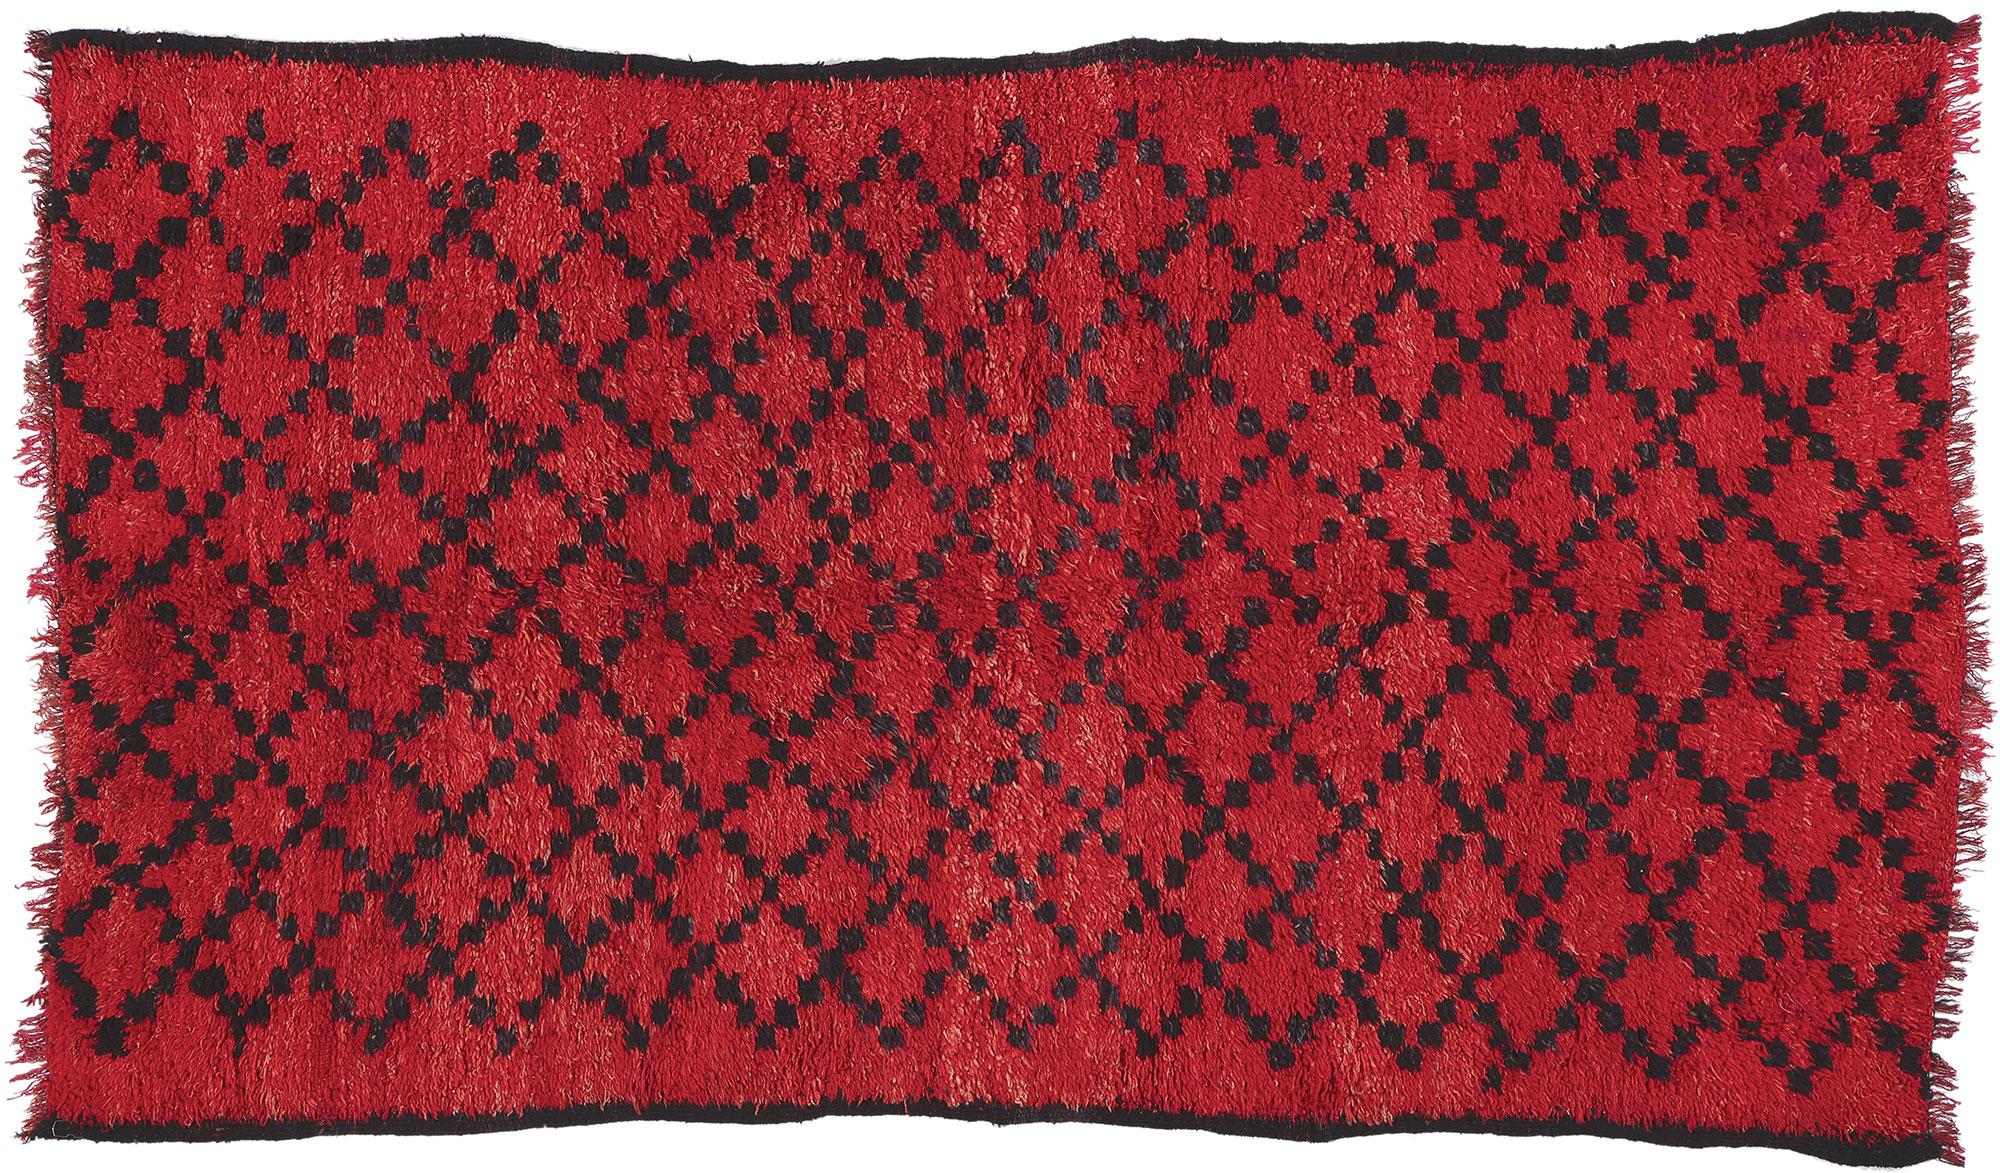 Vintage Beni MGuild Moroccan Rug, Tribal Enchantment Meets Midcentury Modern  For Sale 3